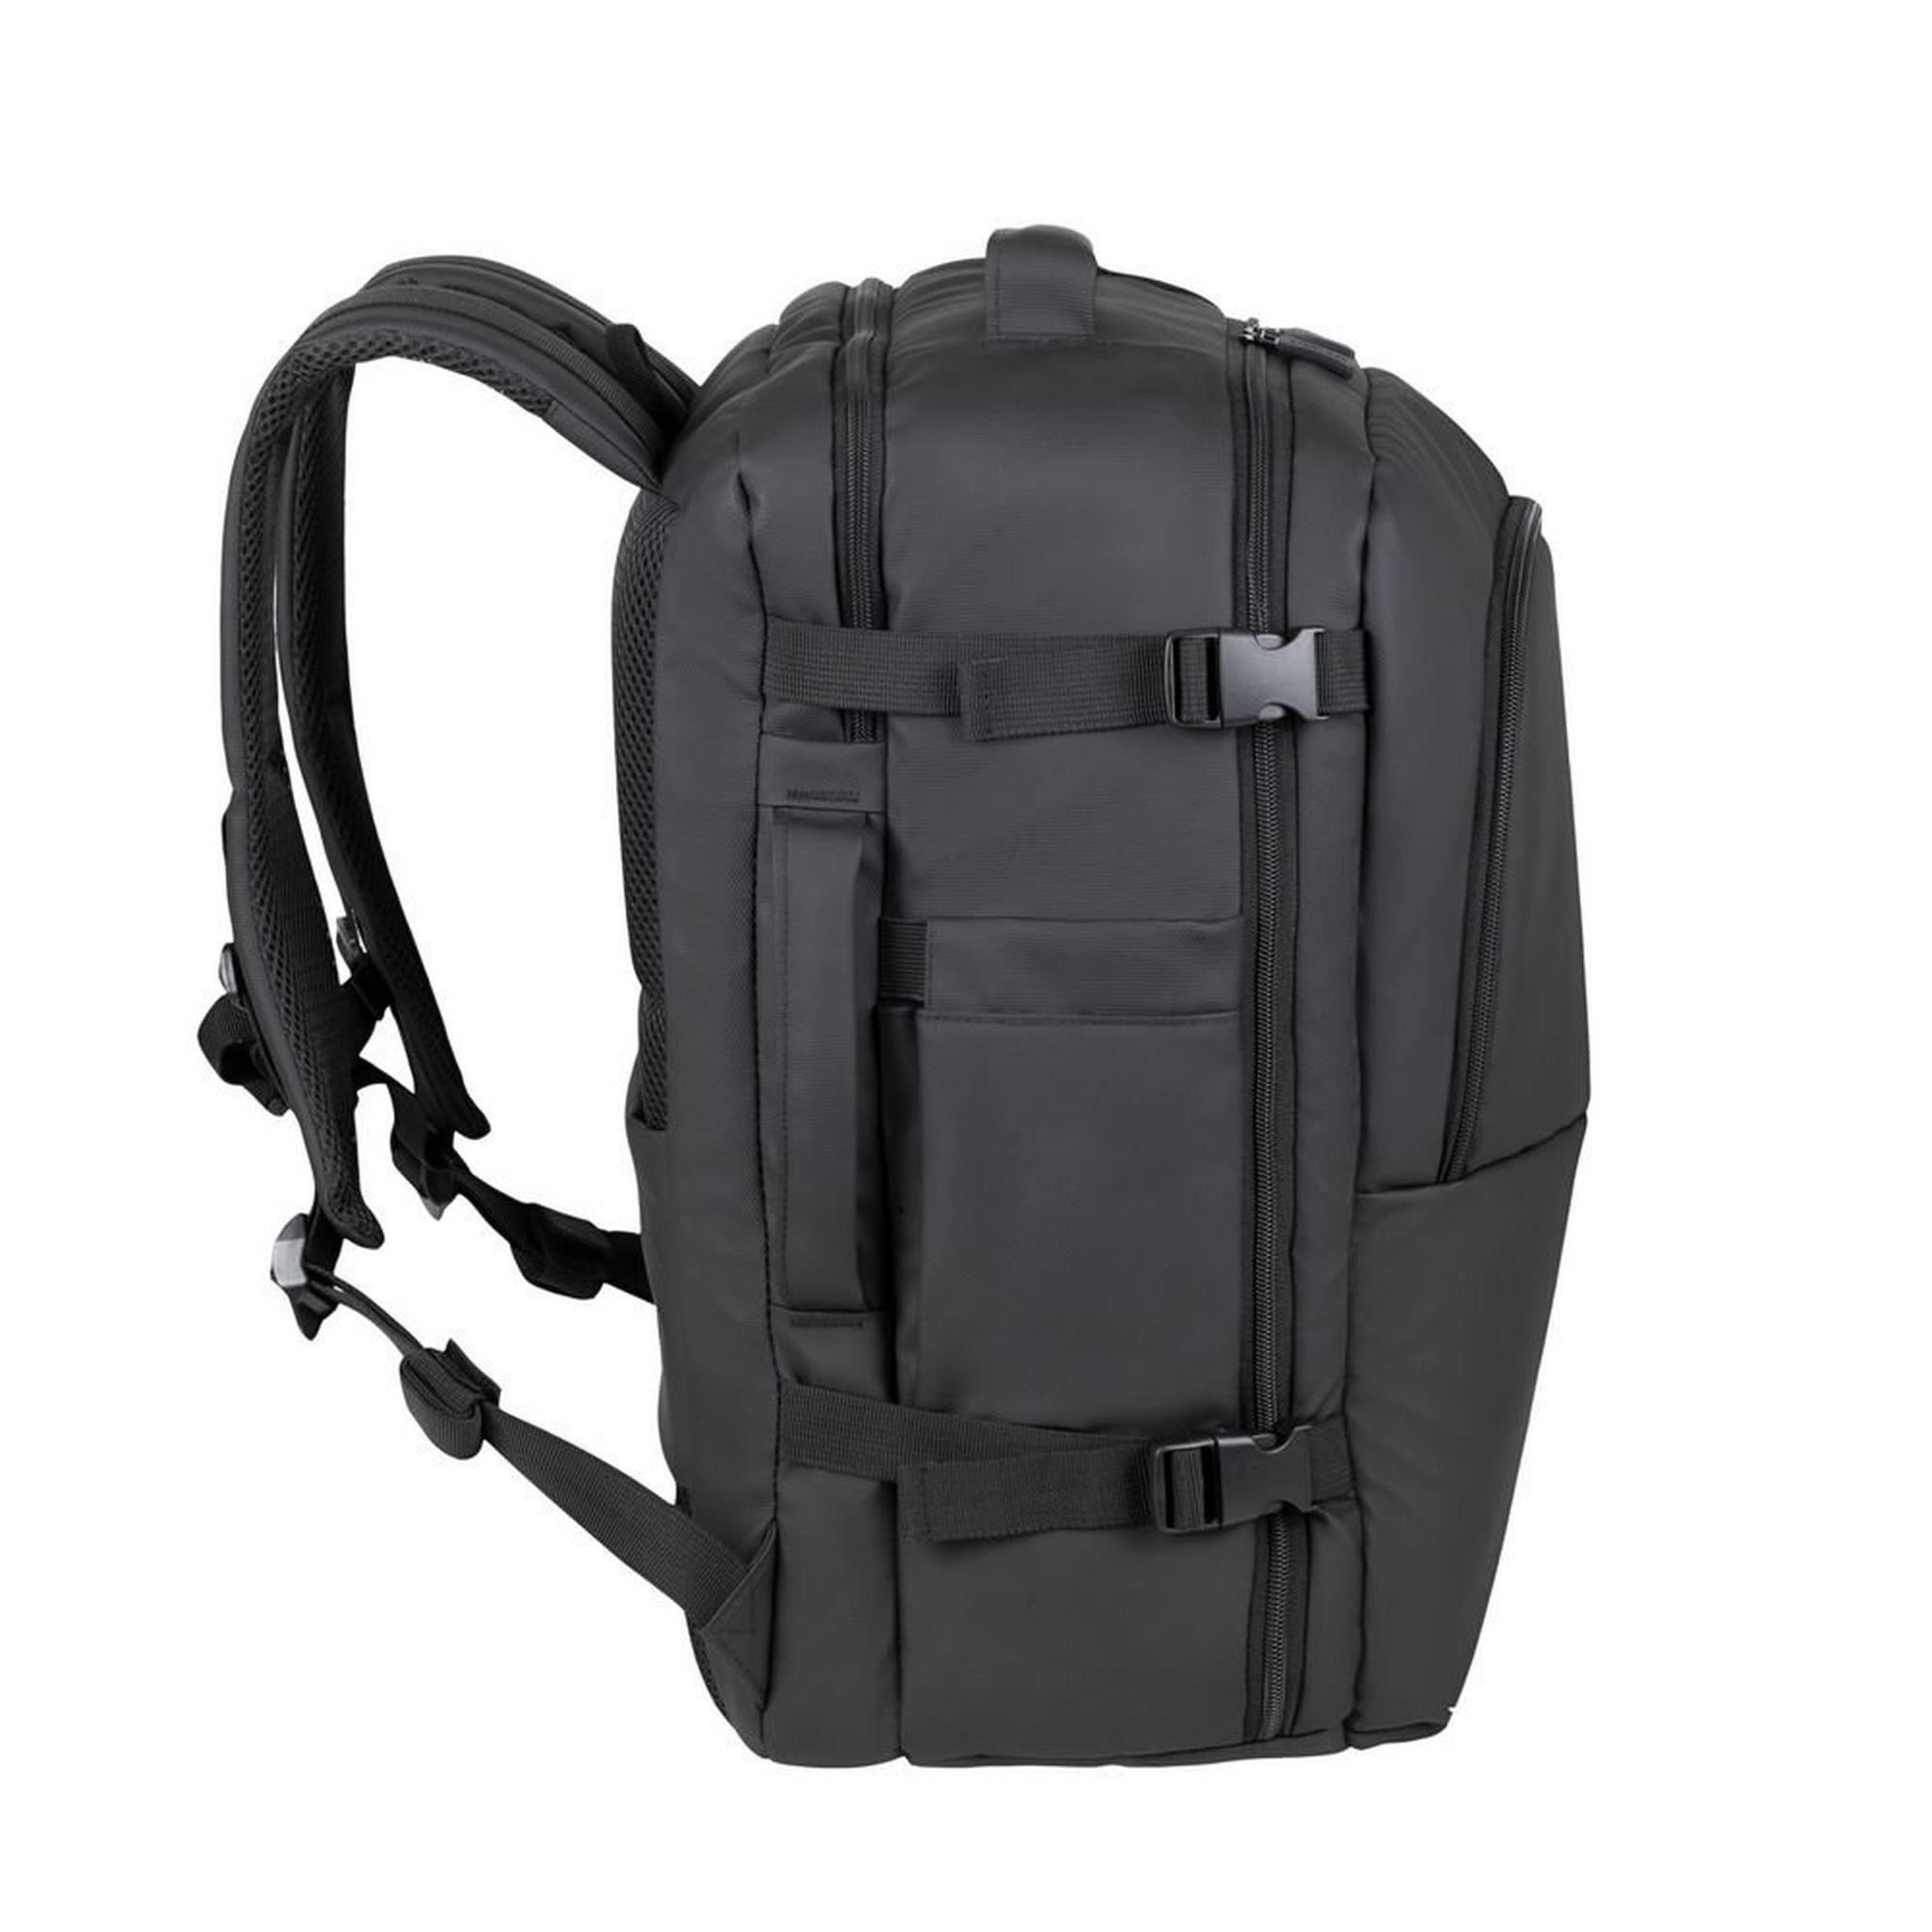 RIVA Eco Laptop Backpack, 17.3-inch, TEGEL-ECO-8465 – Black